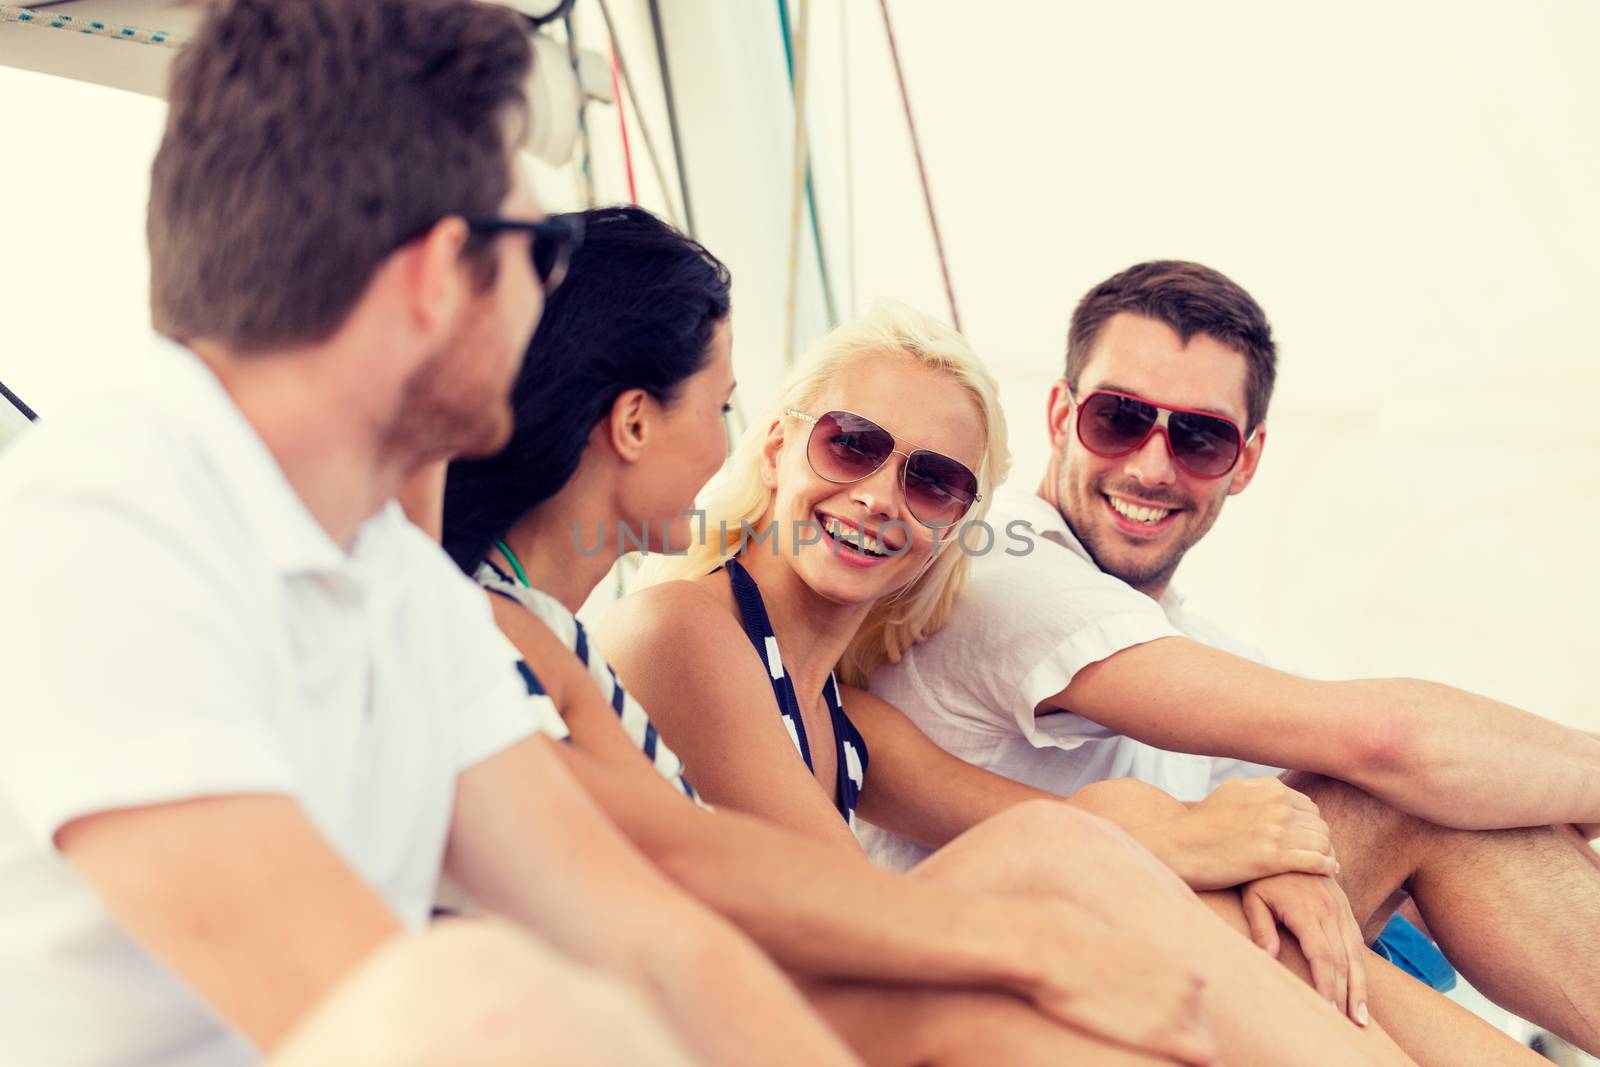 smiling friends sitting on yacht deck by dolgachov